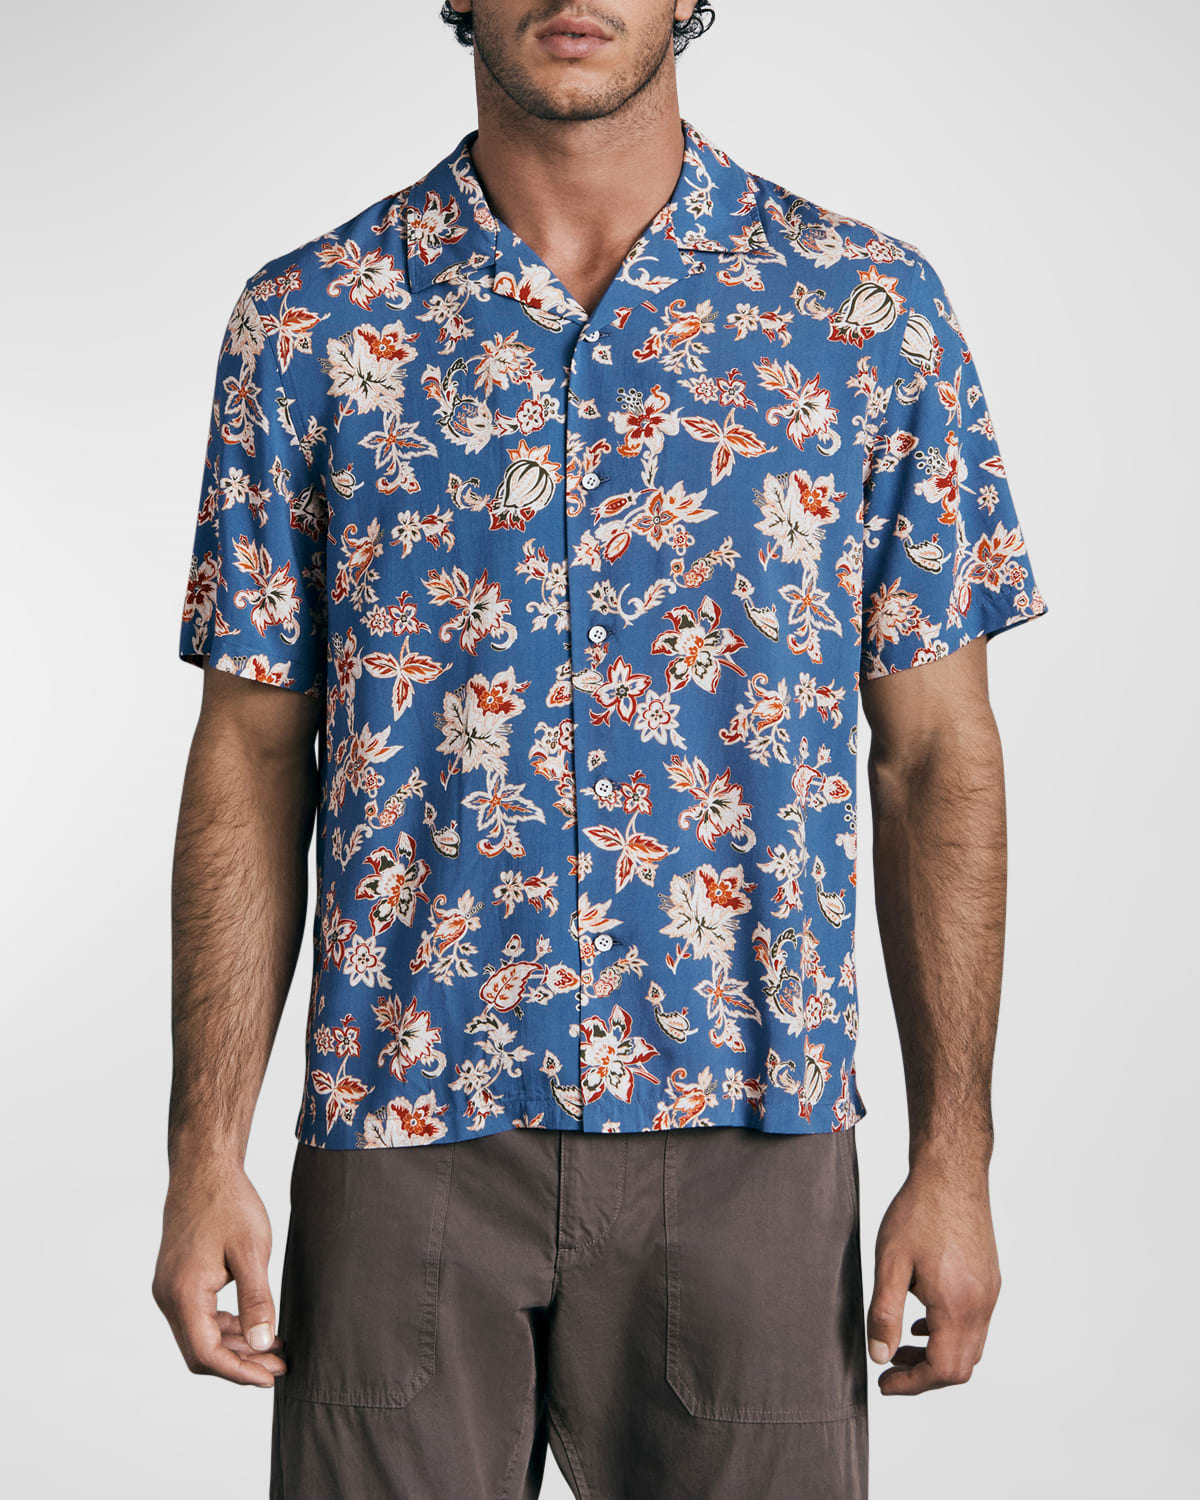 Men's Avery Floral-Print Camp Shirt